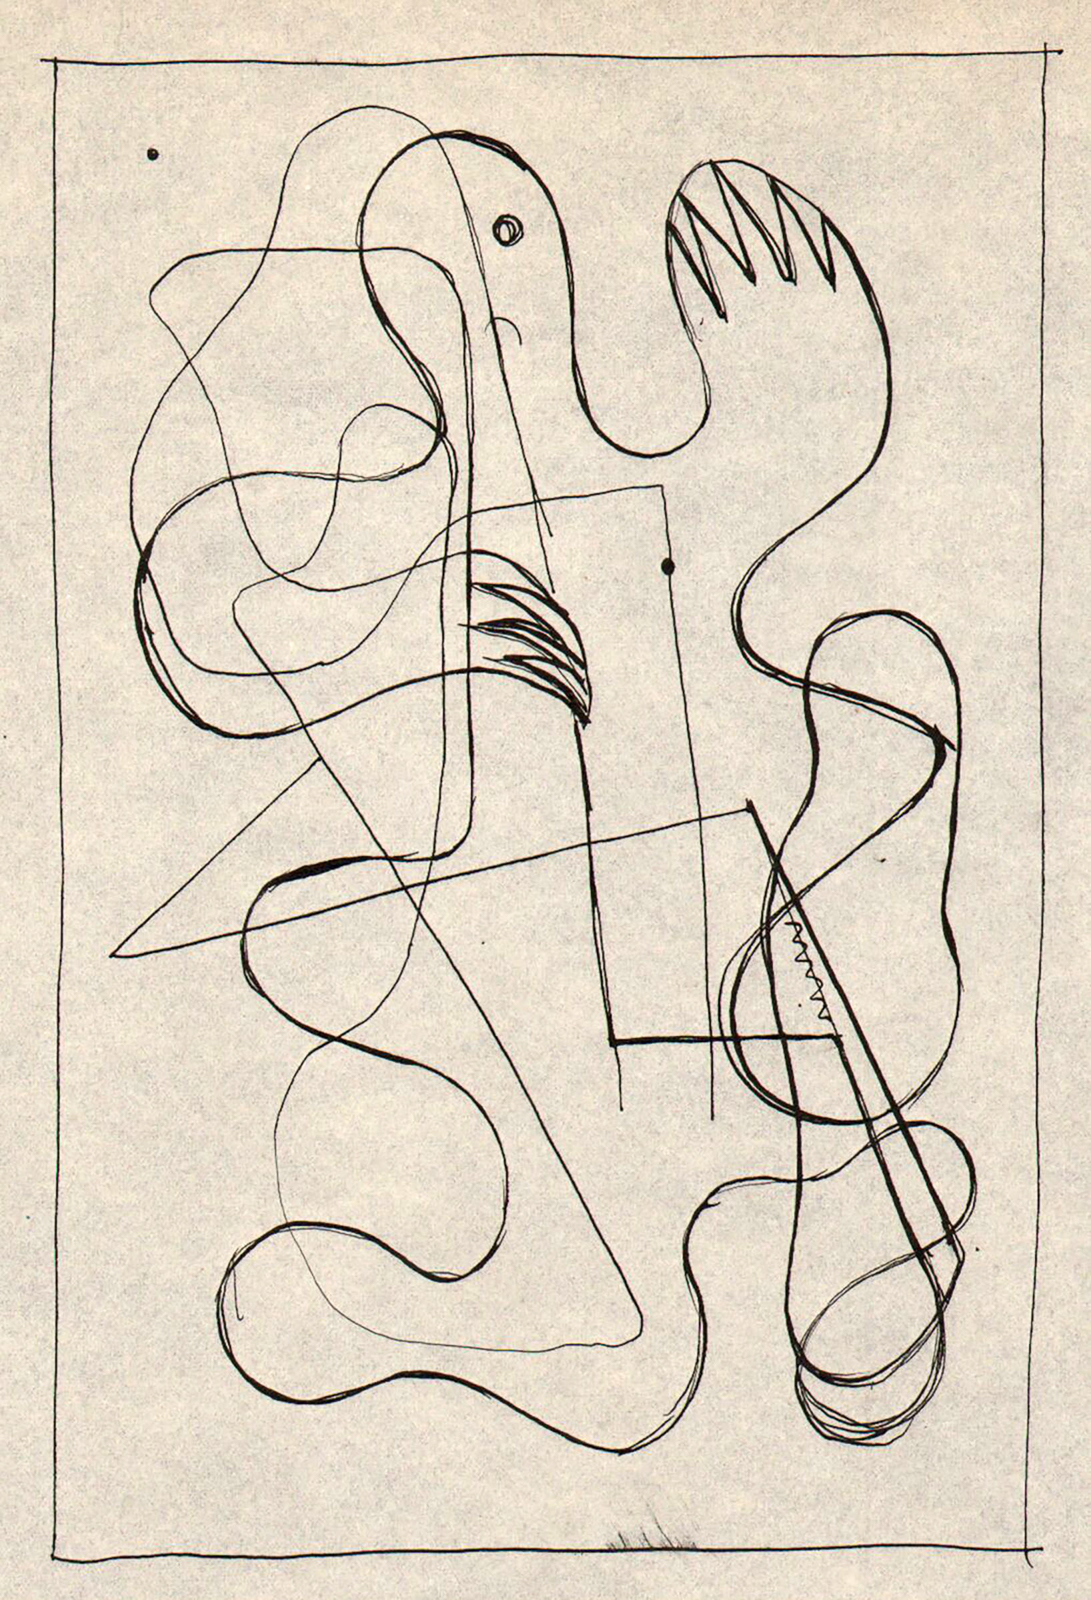 Morris Blackburn, Study for Emergence, 1948, ink on Japanese paper, 14 x 11 ½ inches. Morris Blackburn estate, PAFA, courtesy of Dolan/Maxwell